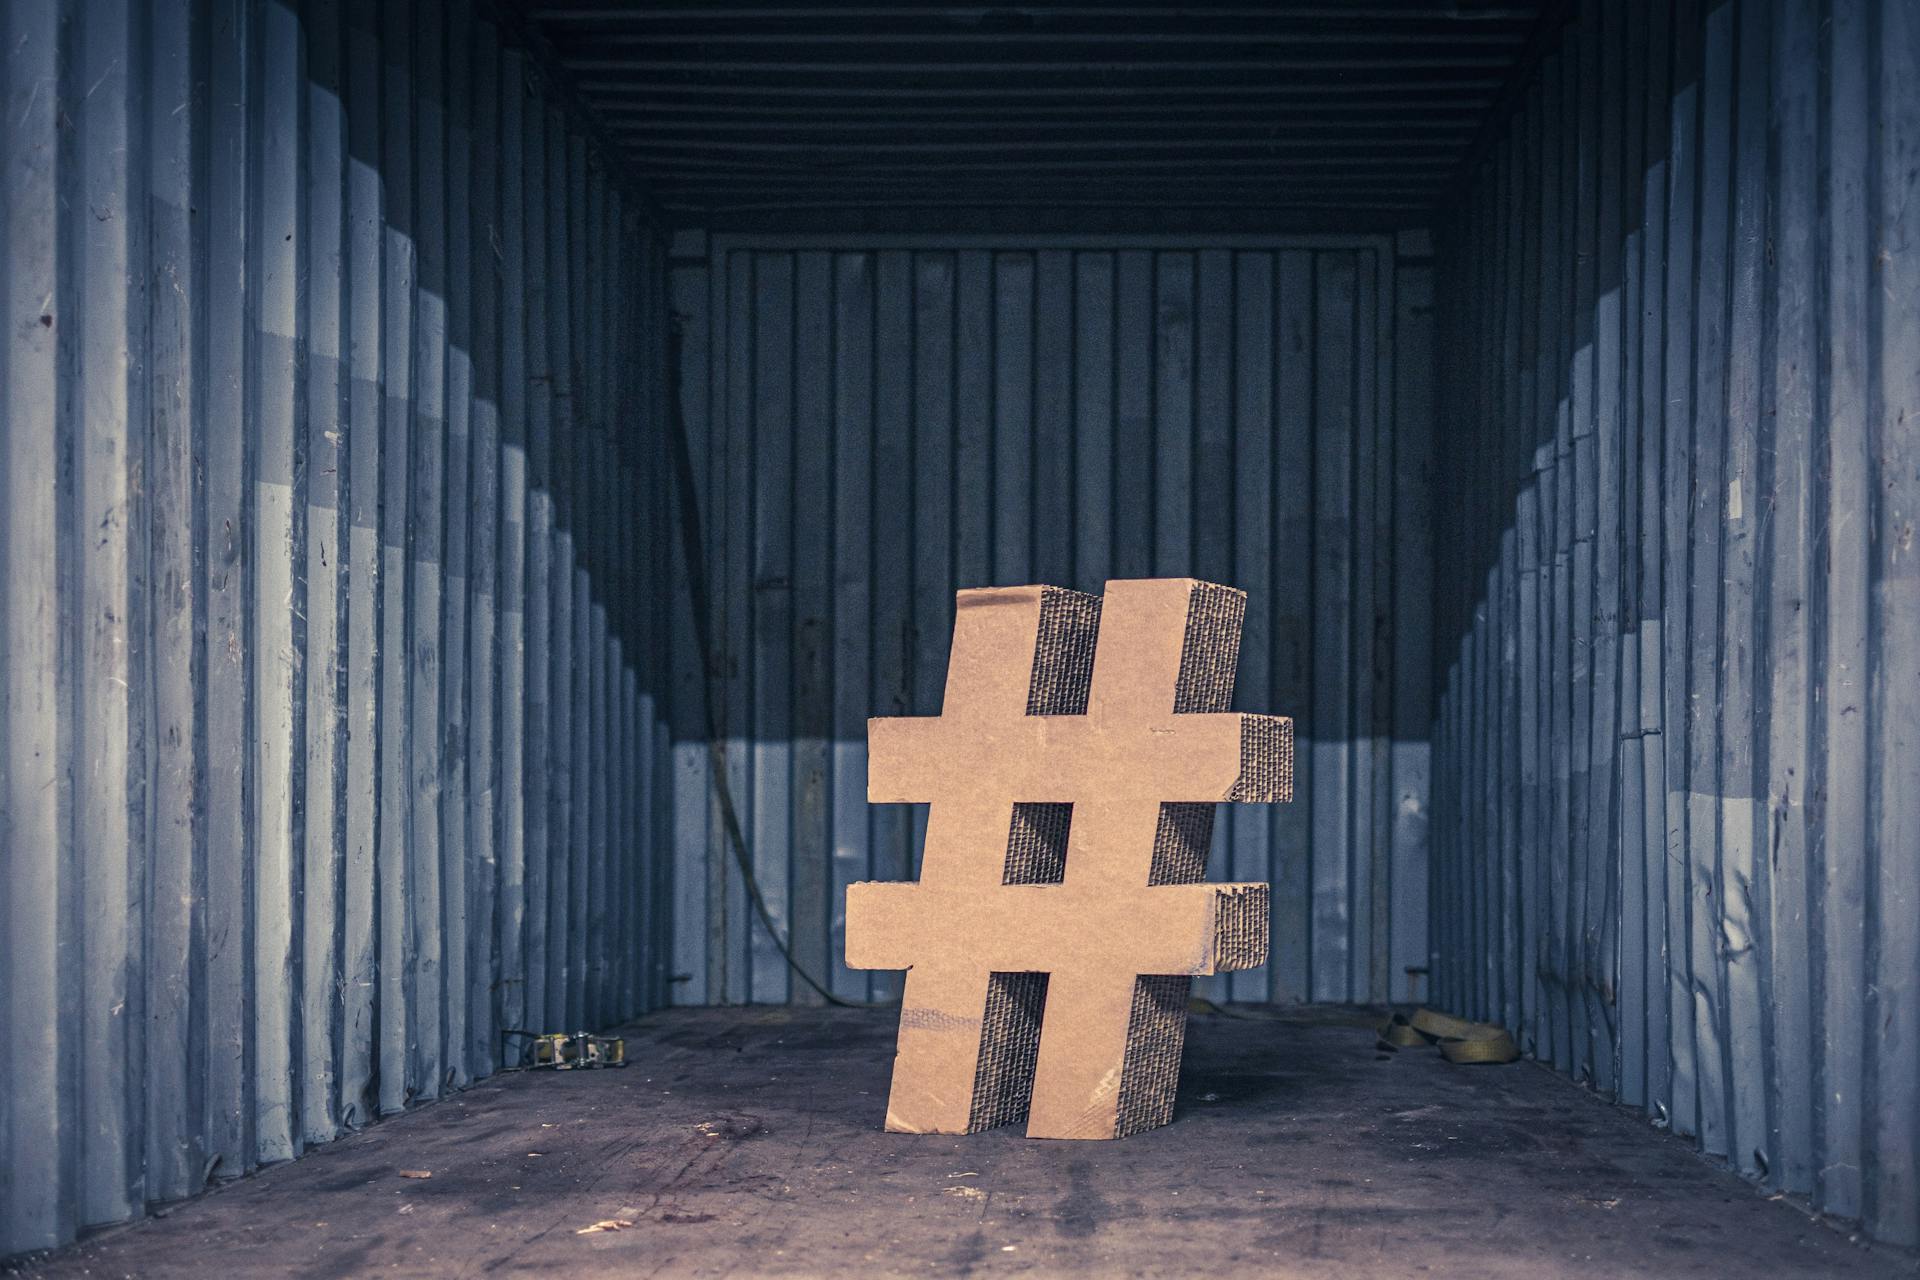 Hashtag symbol, Instagram marketing tactic